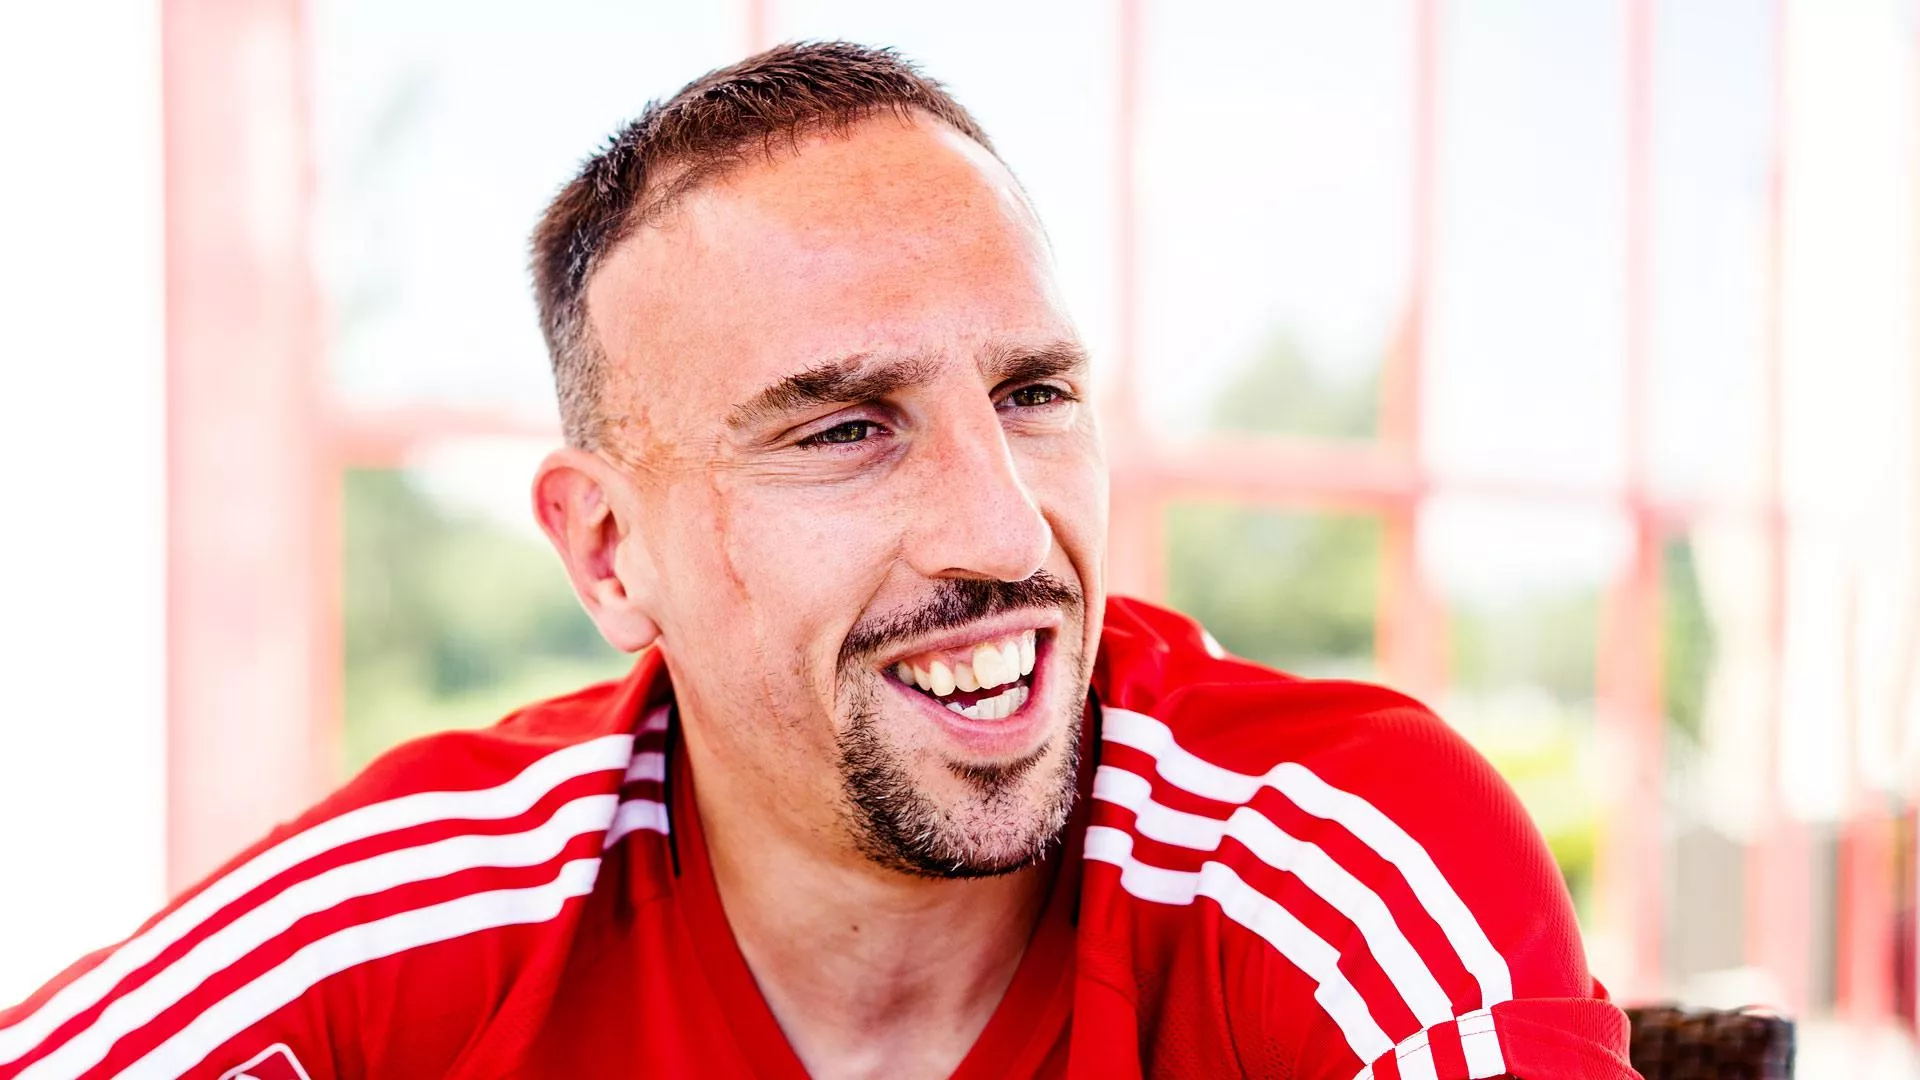   Ribery futbolu bırakıyor mu? Ribery futbolu bıraktı mı? Ribery futbolu bırakacak mı?